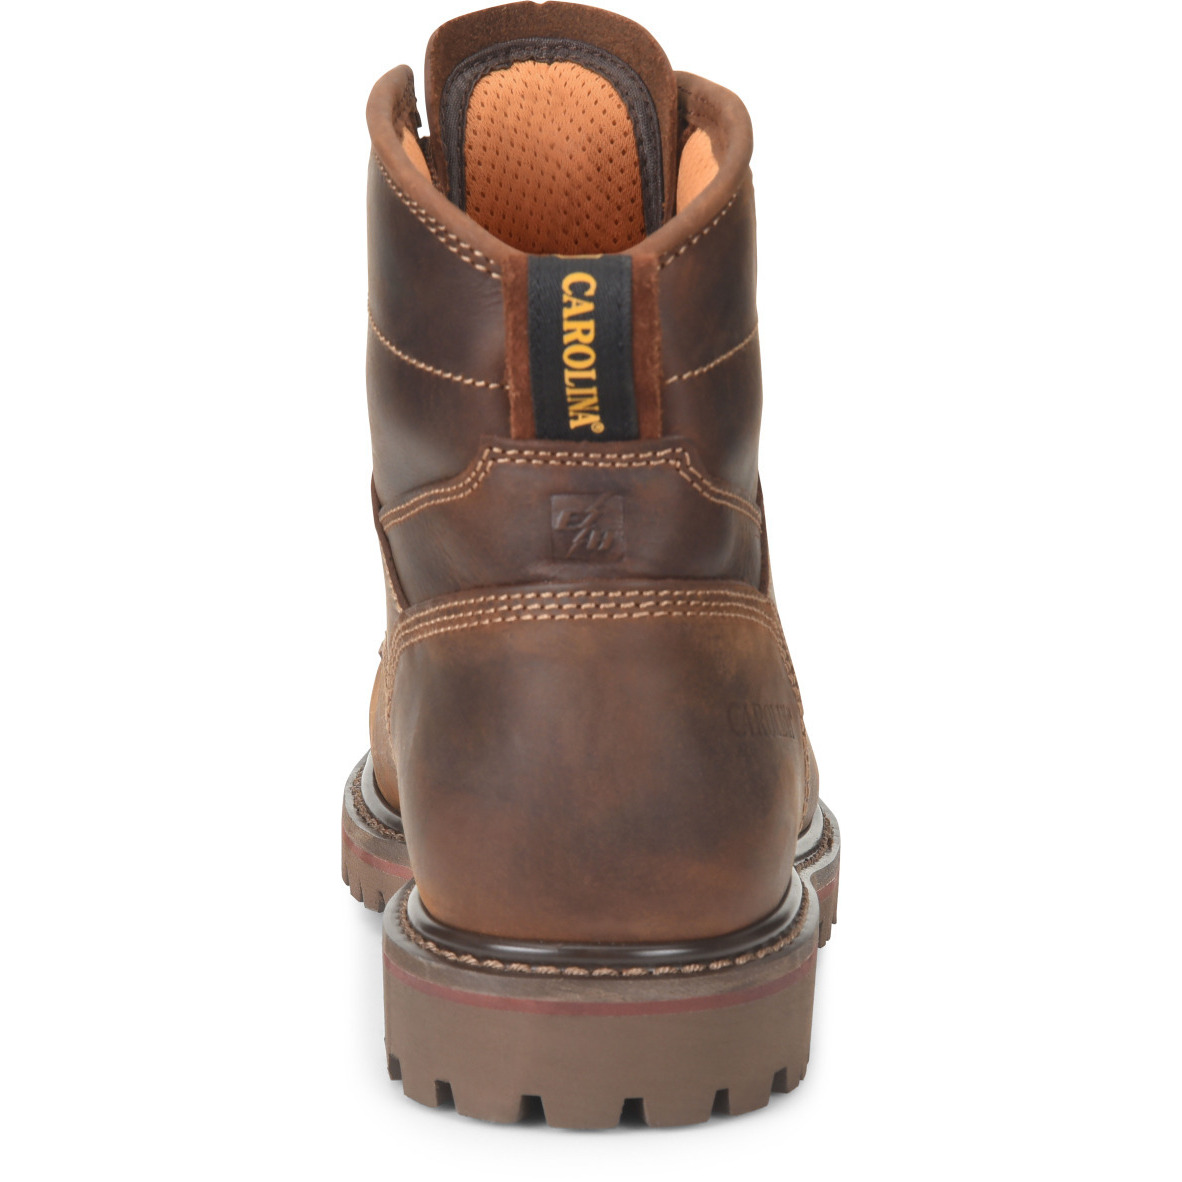 CAROLINA Men's 28 Series 6 Composite Toe Waterproof Work Boots Medium Brown - CA7528 BROWN - BROWN, 11.5-D